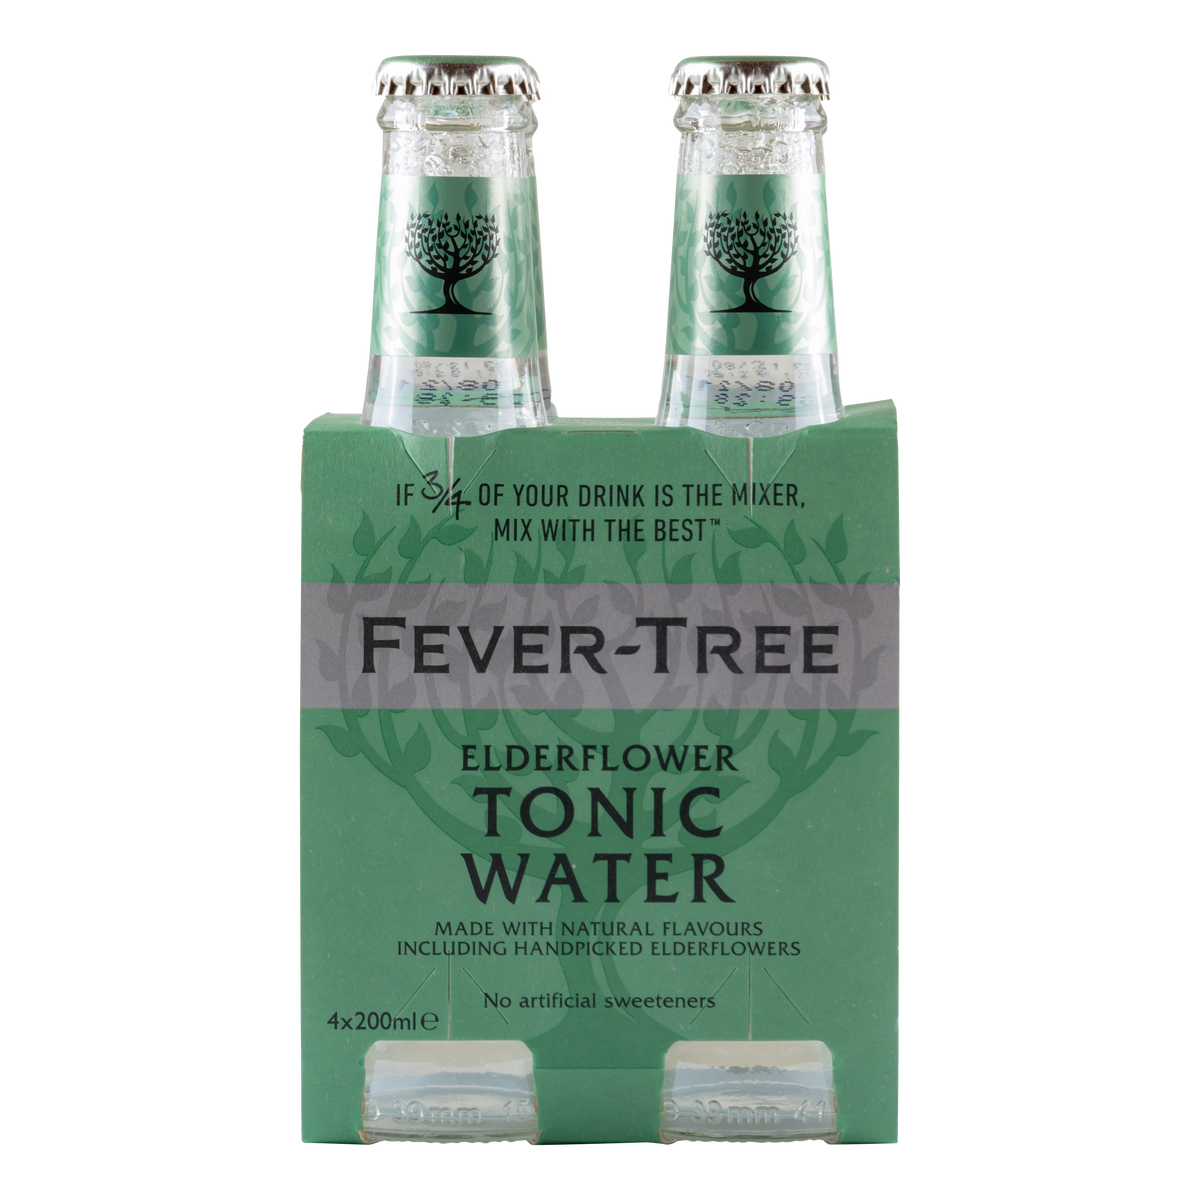 Egmonts Garden gin Fever-Tree Elderflower vlierbloesem tonic water 